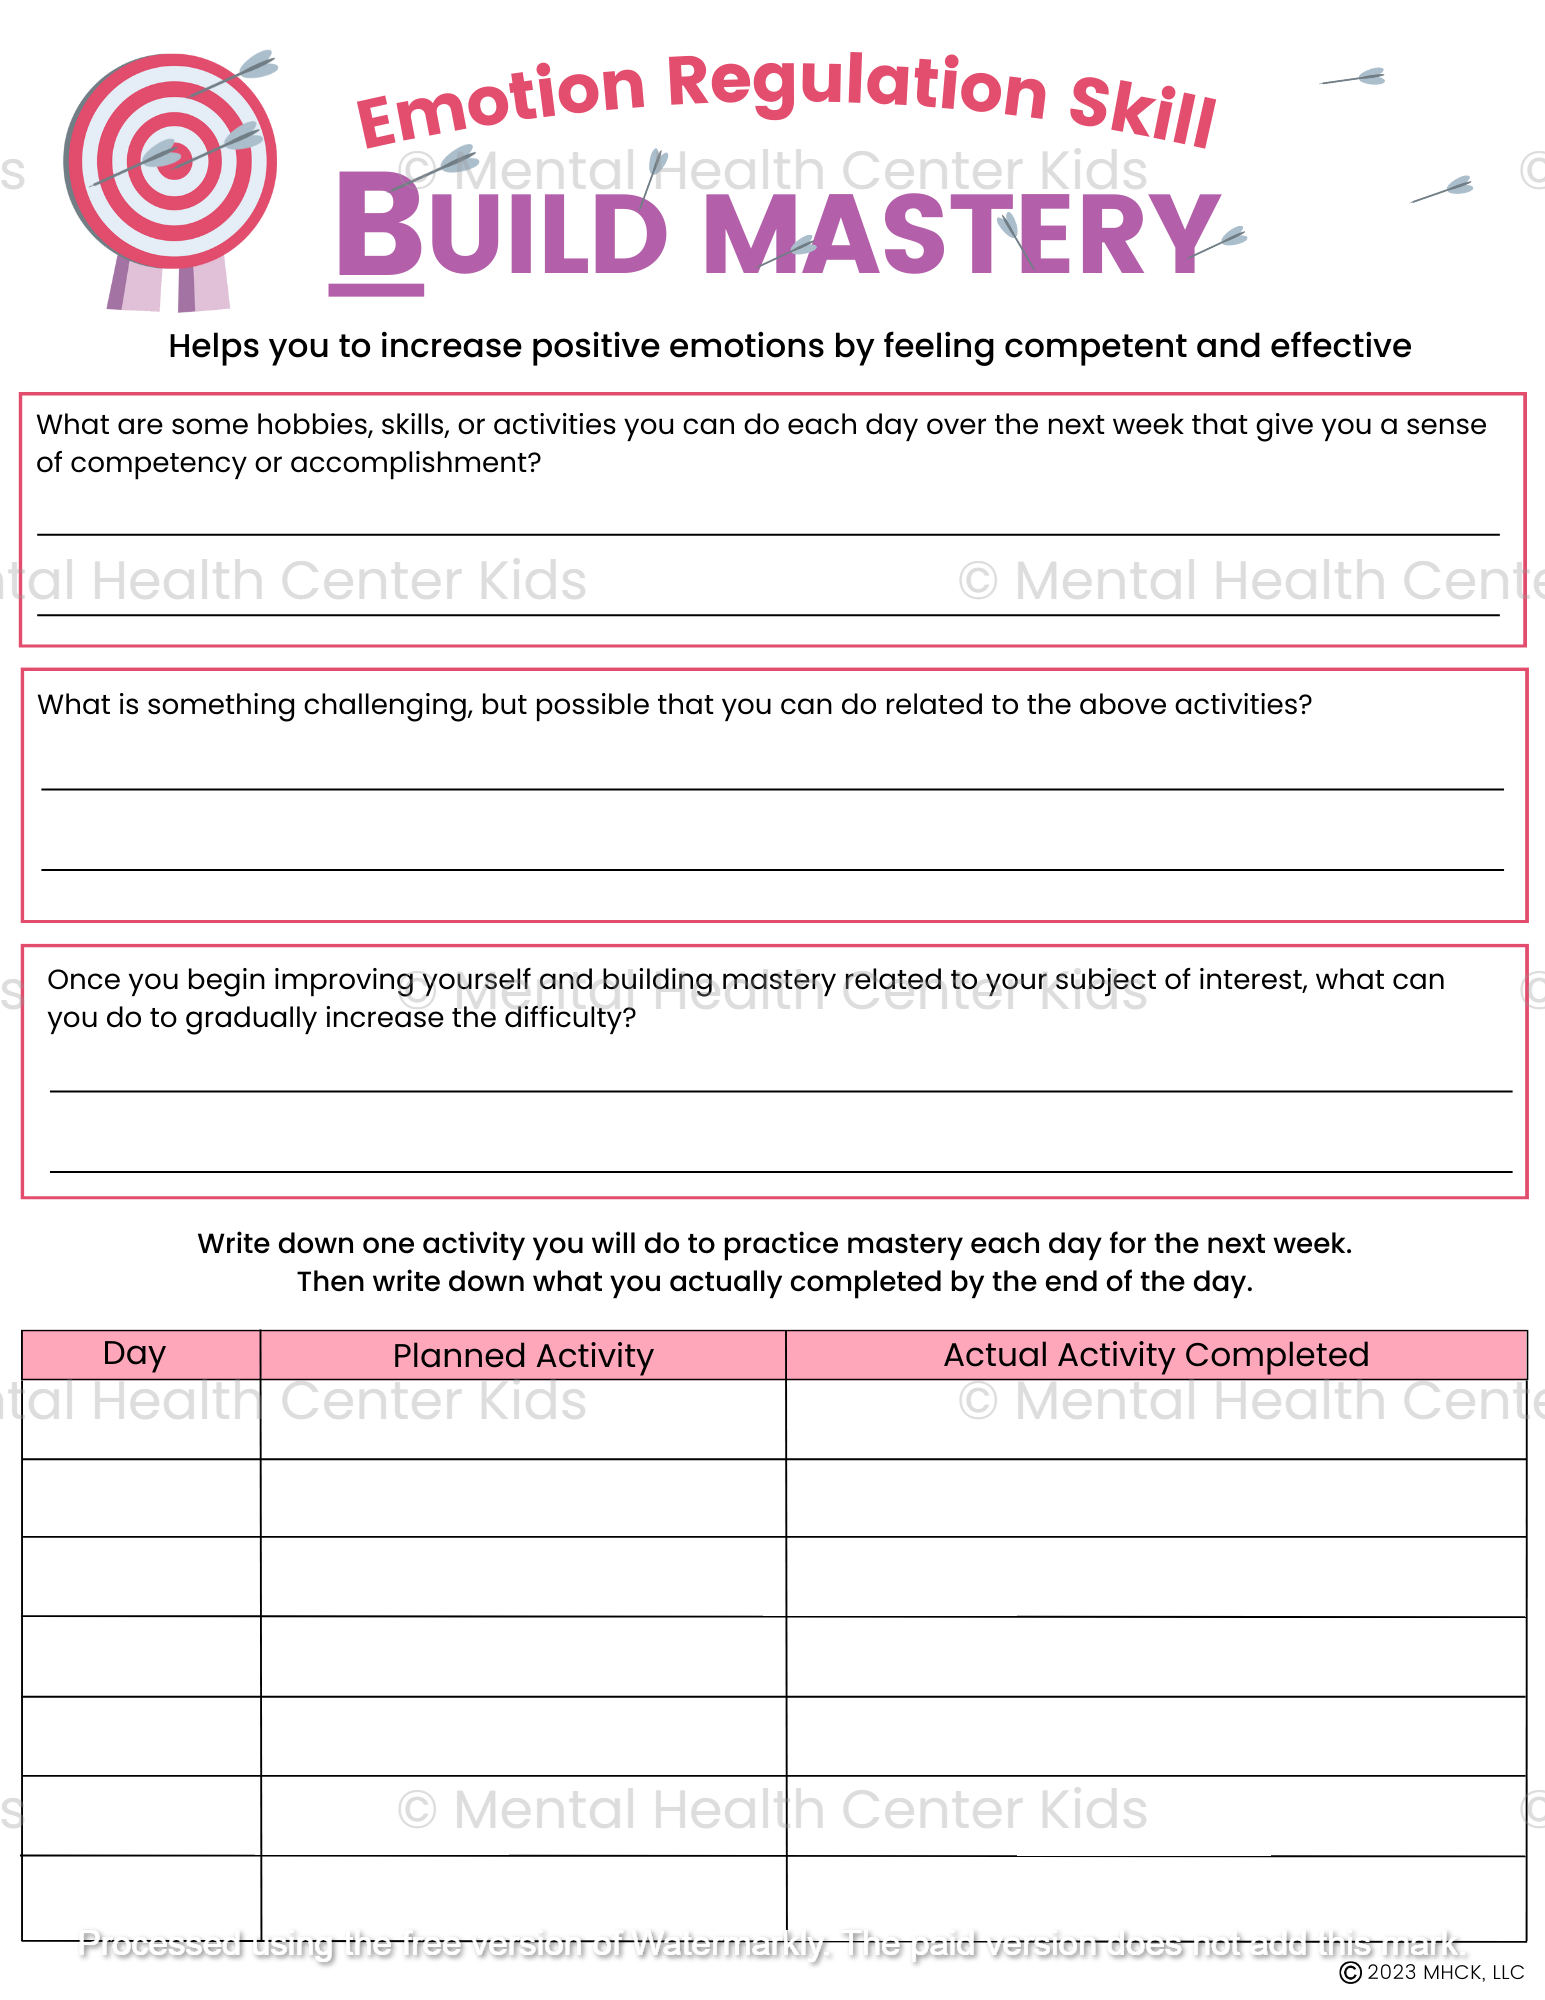 dbt build mastery worksheet